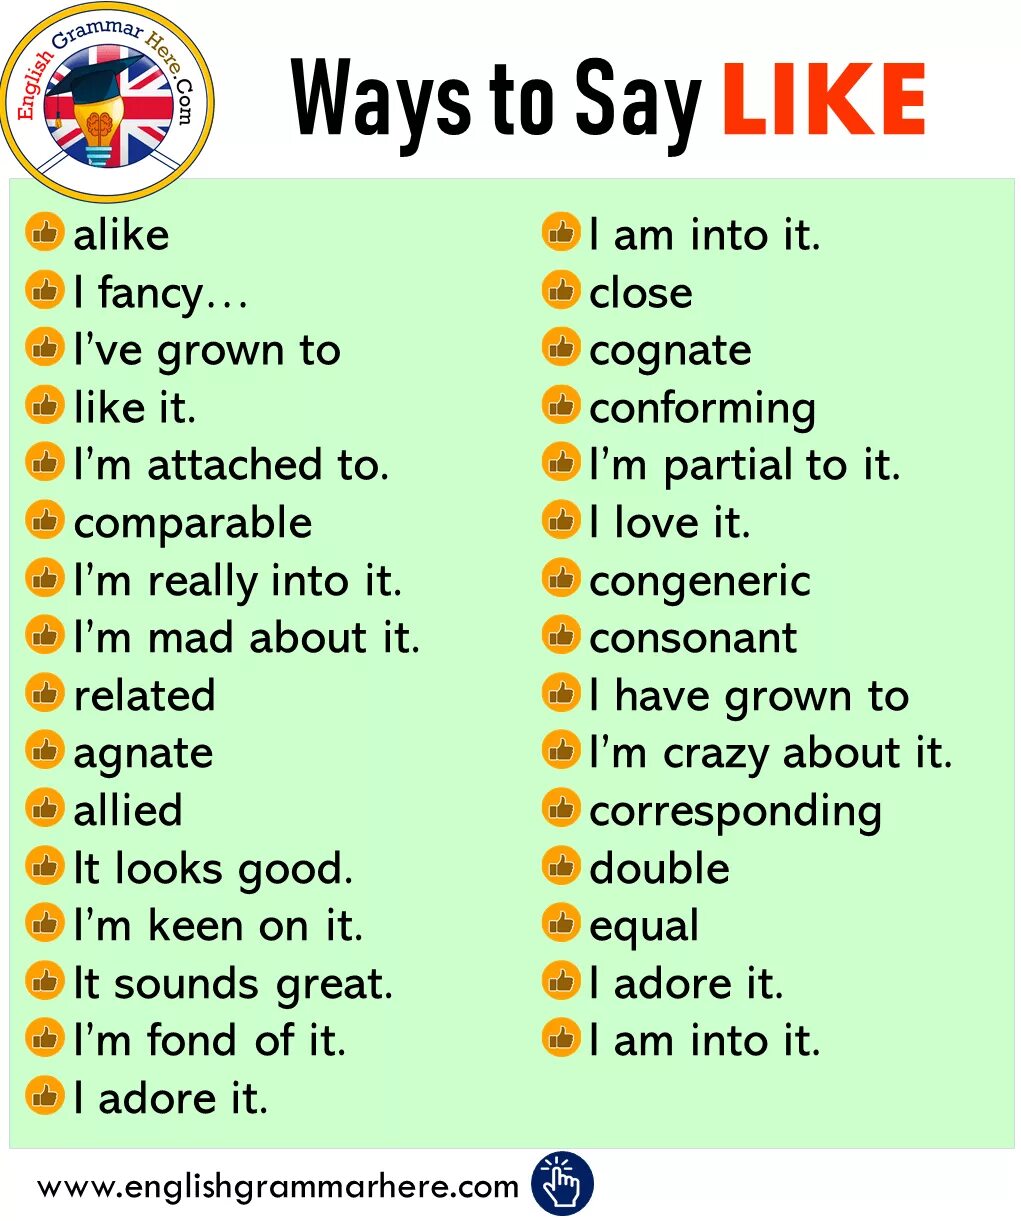 Say like. Английский ways to say. Английский other way to say. Other ways to say i like. I like синонимы на английском.